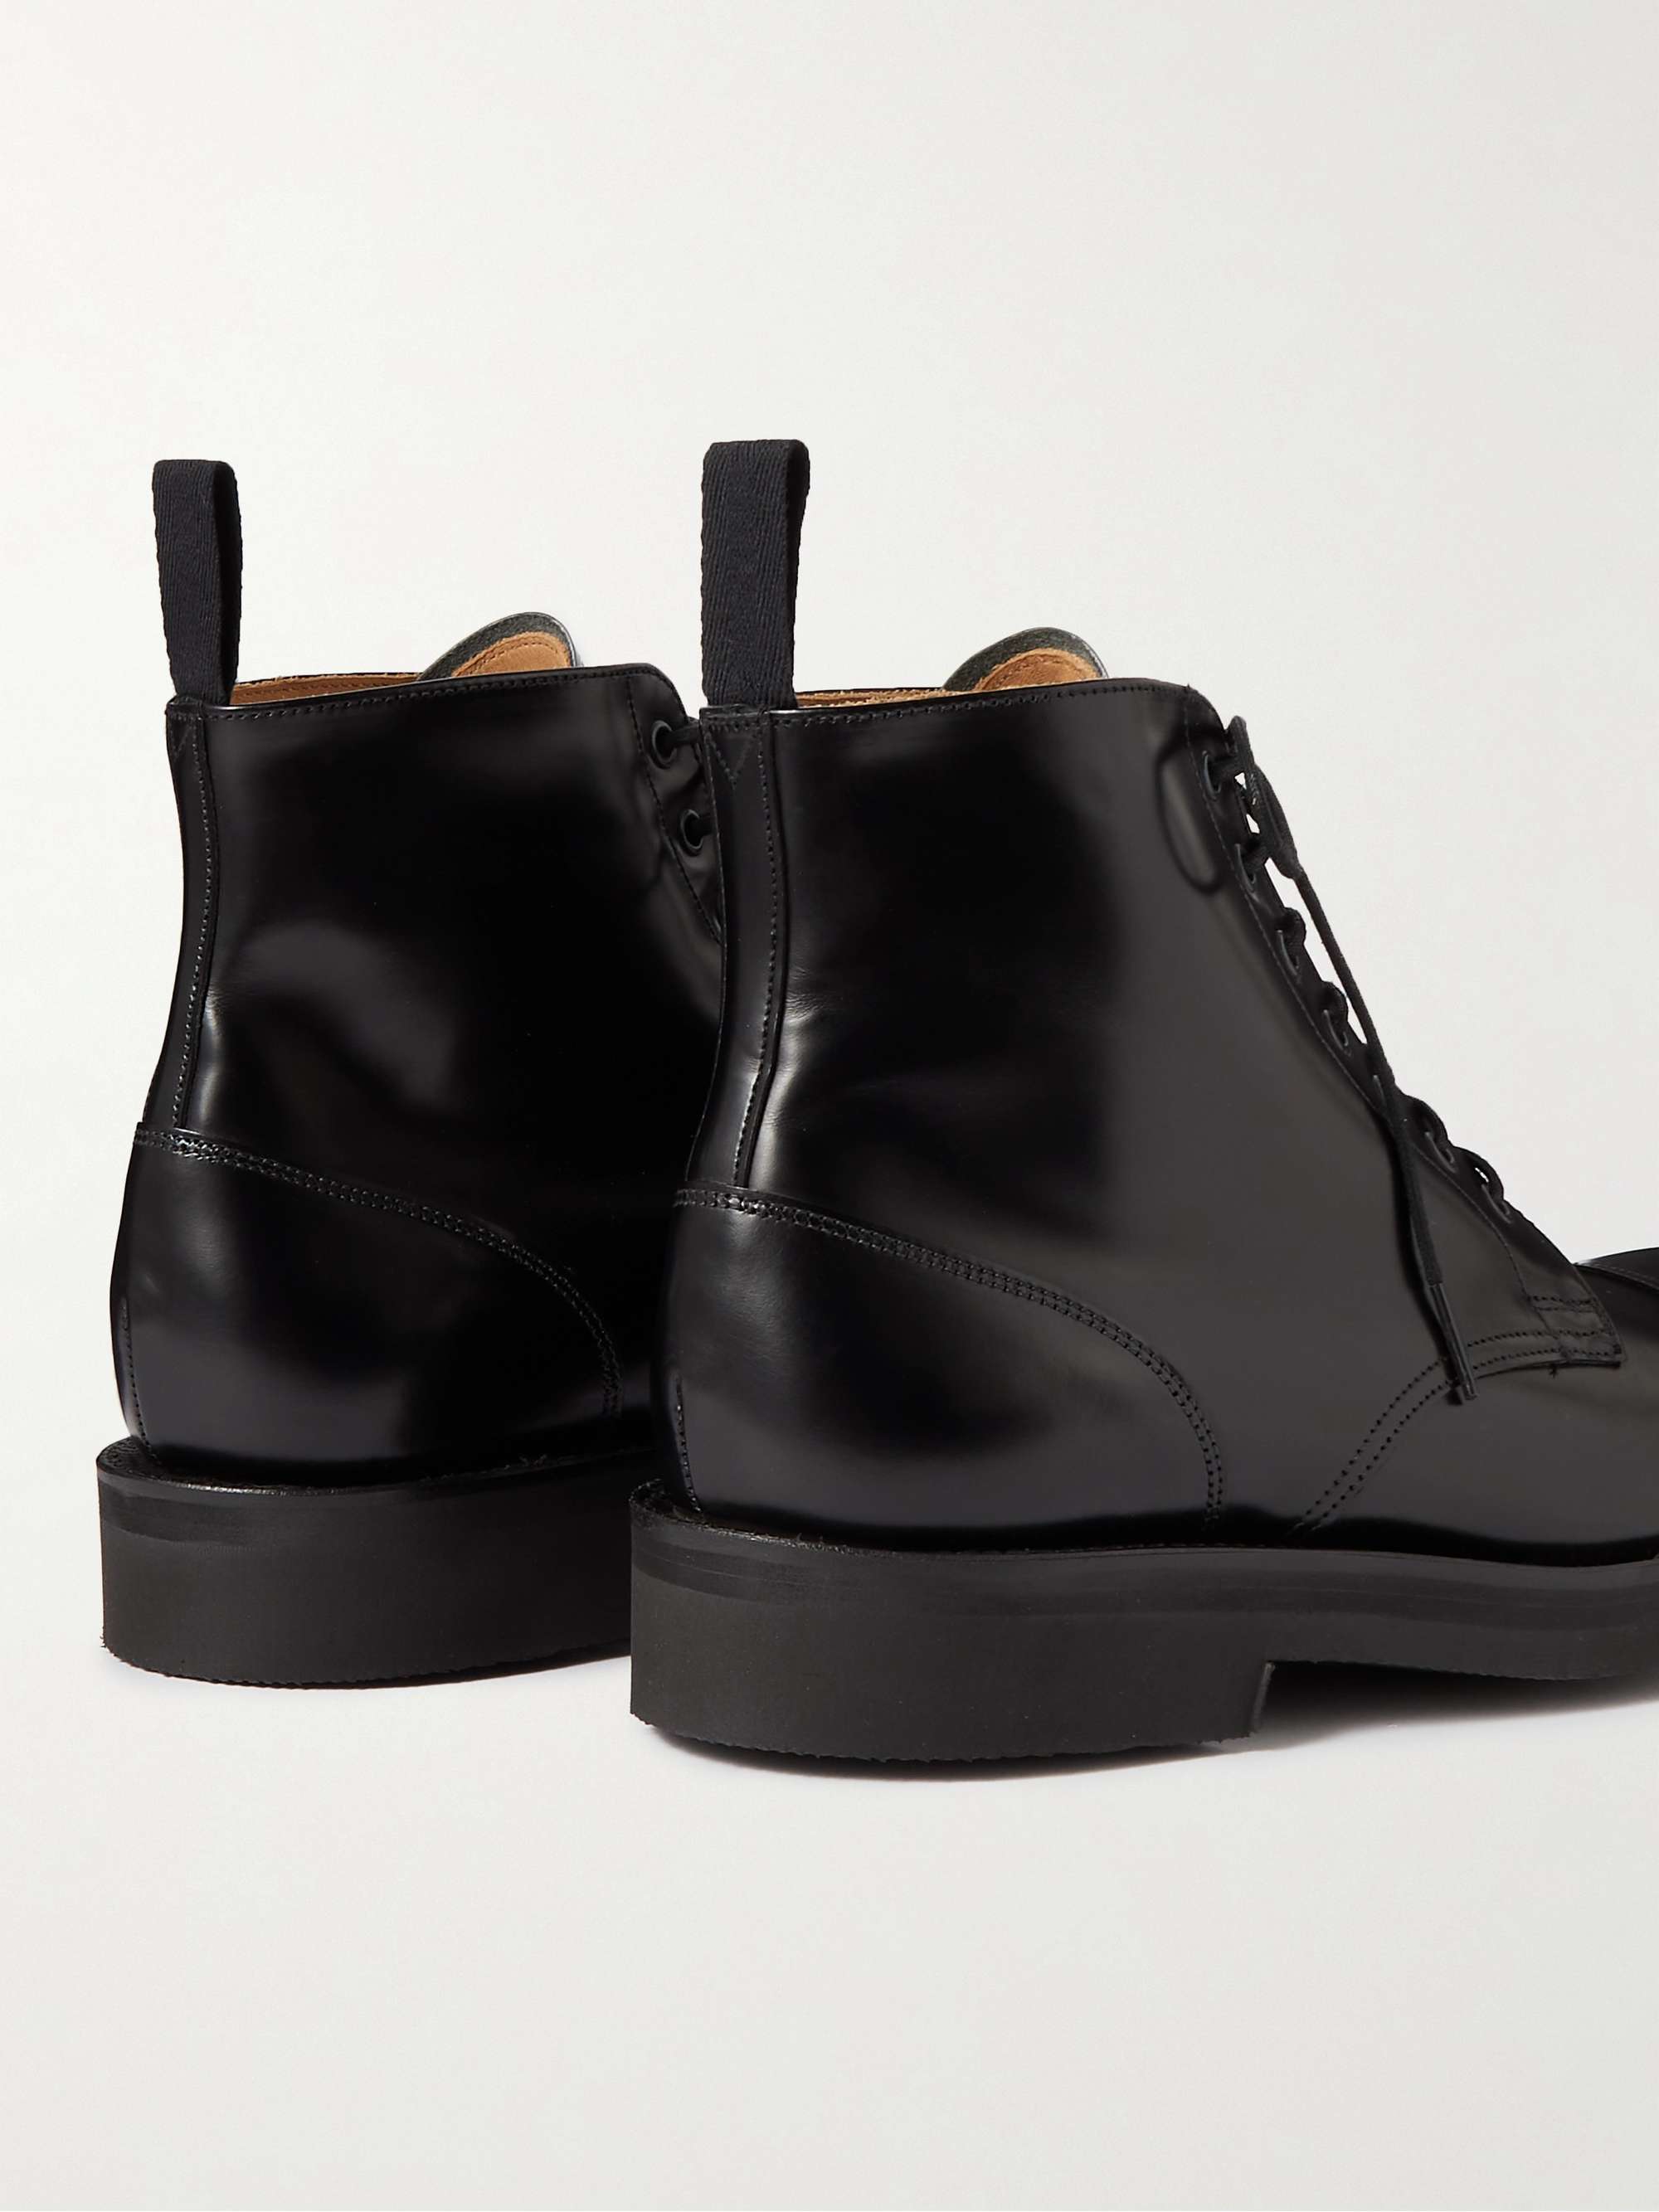 GRENSON Desmond Leather Boots